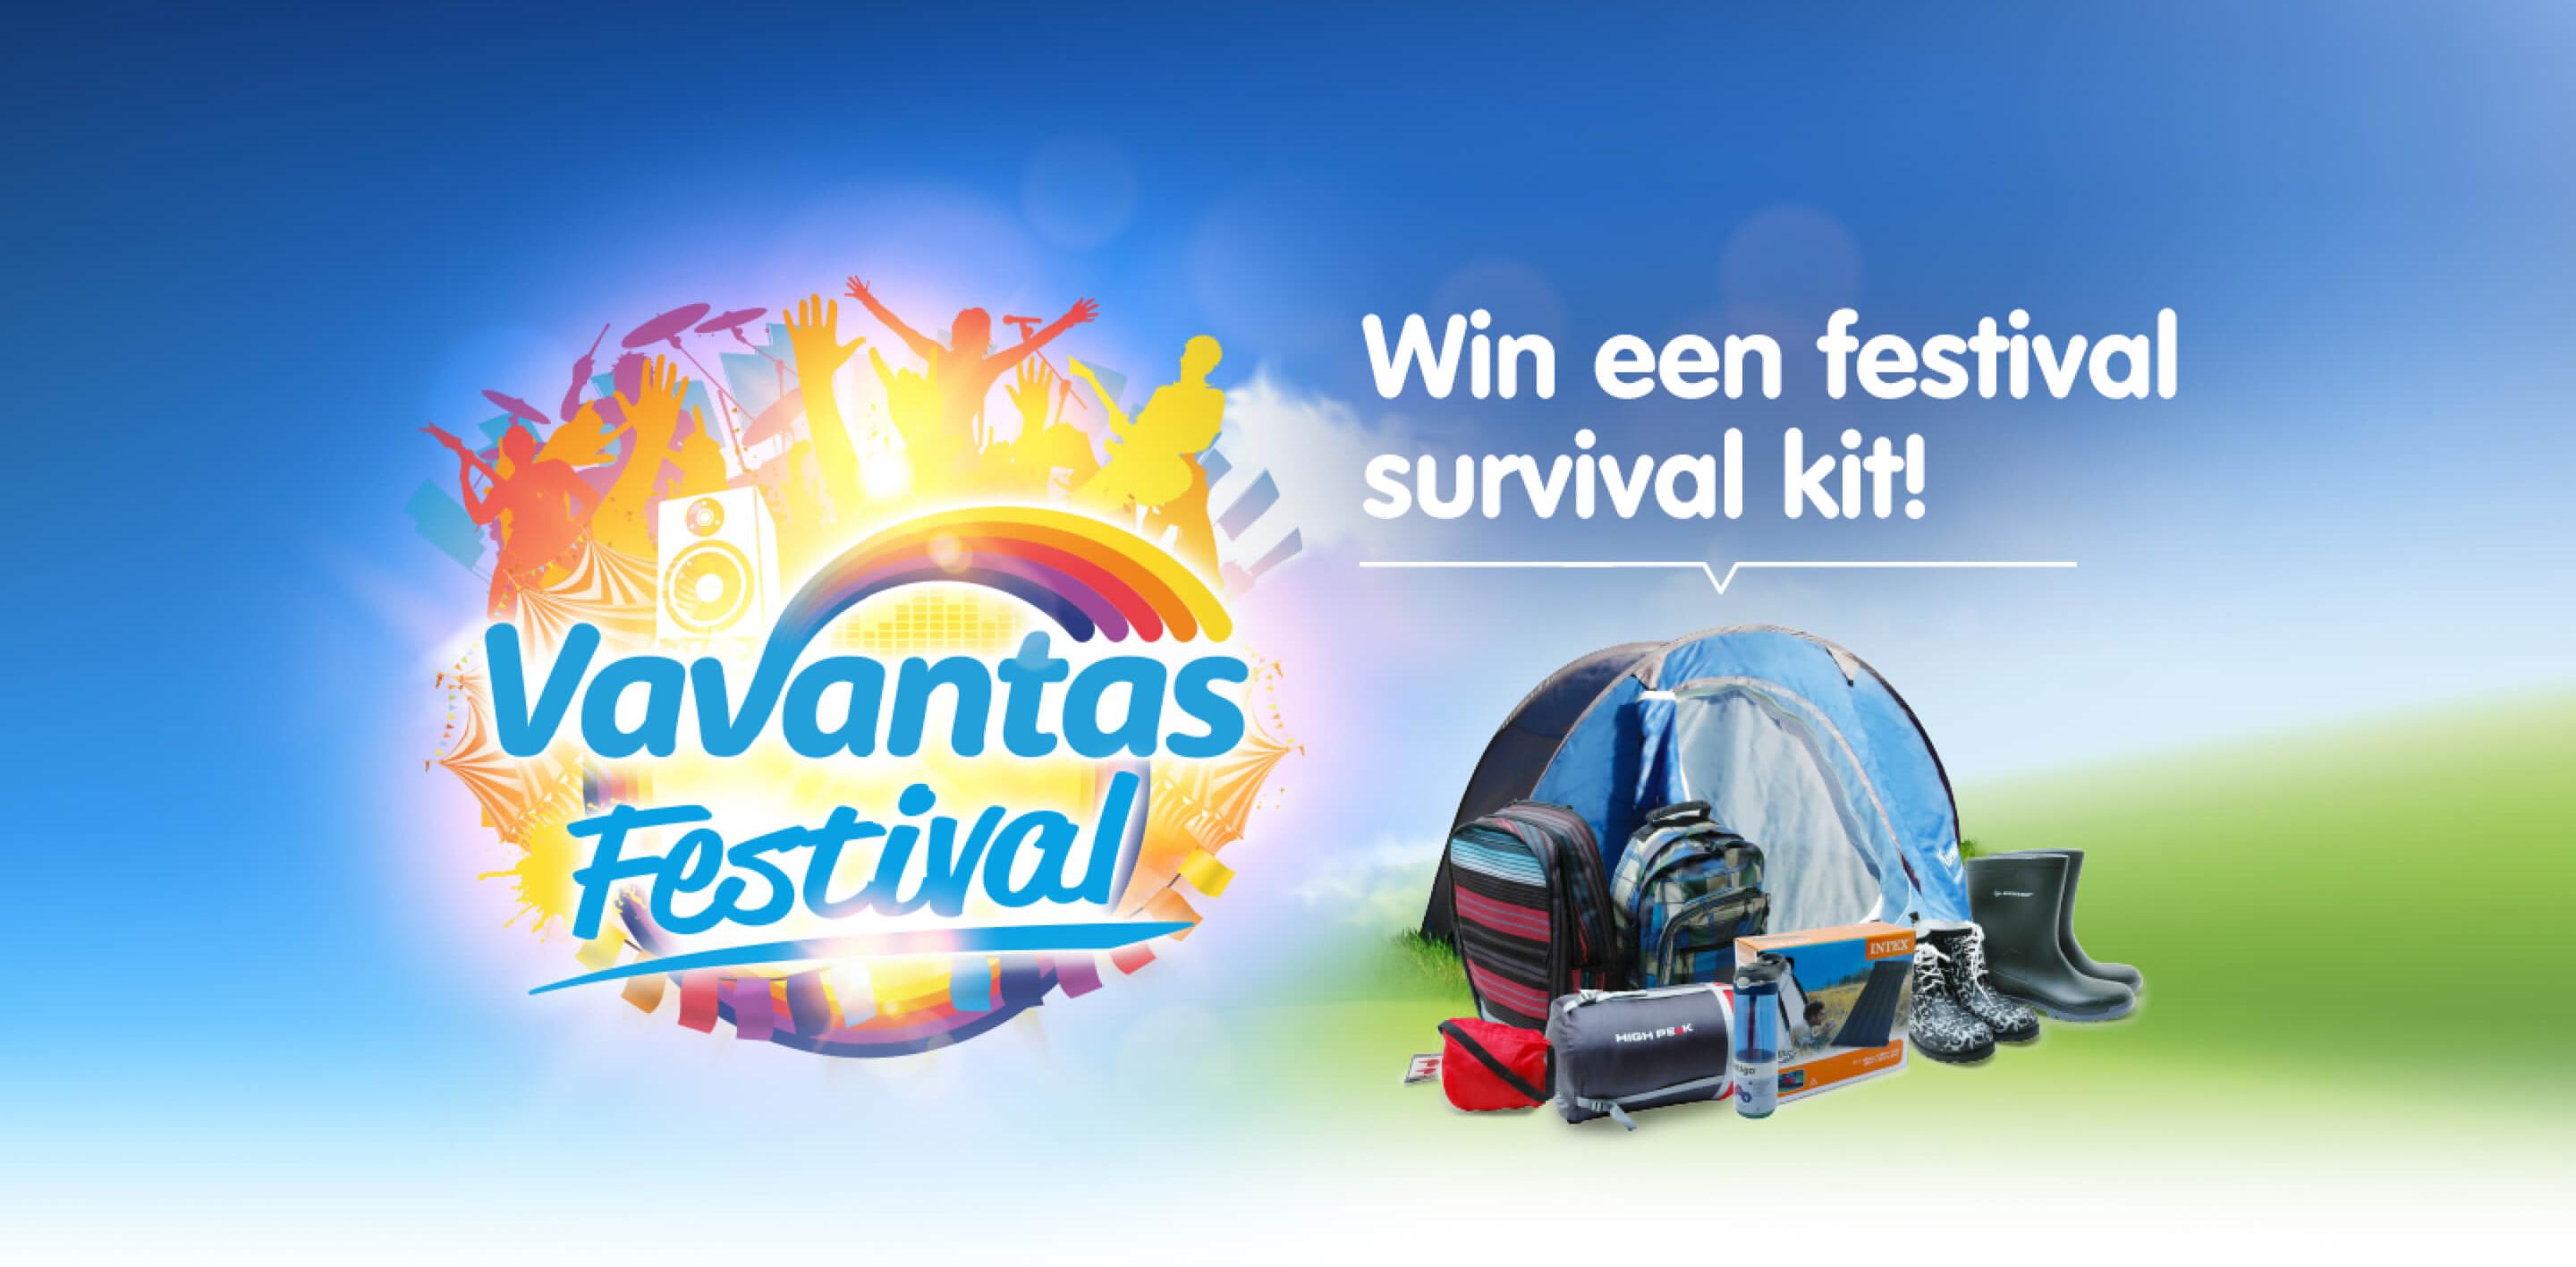 Win een festival survival kit!